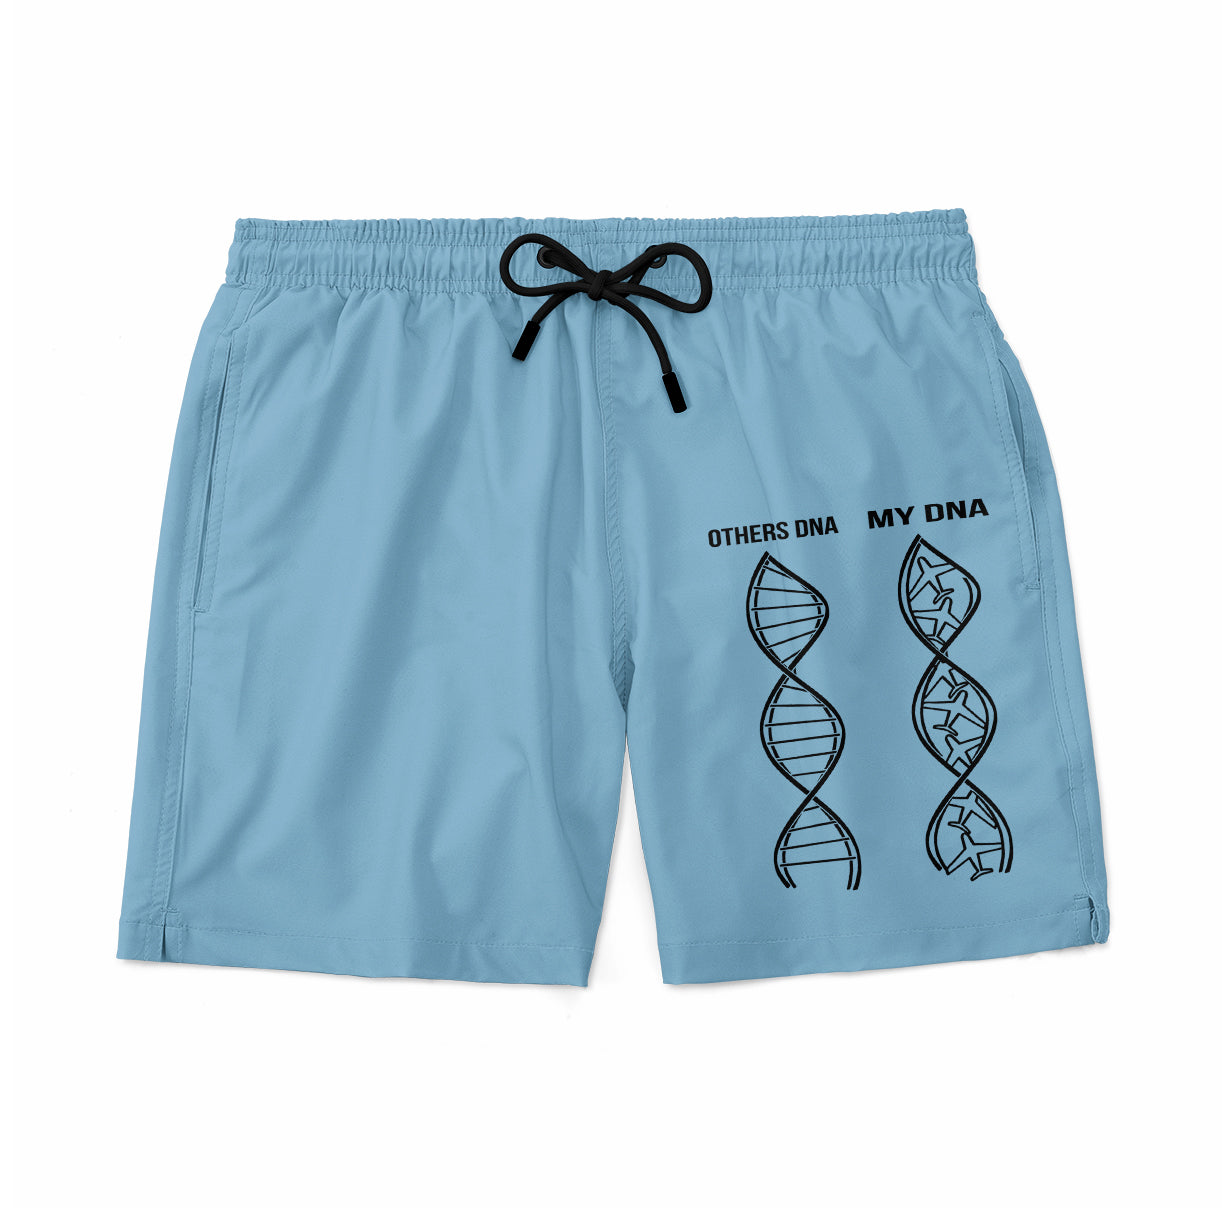 Aviation DNA Designed Swim Trunks & Shorts